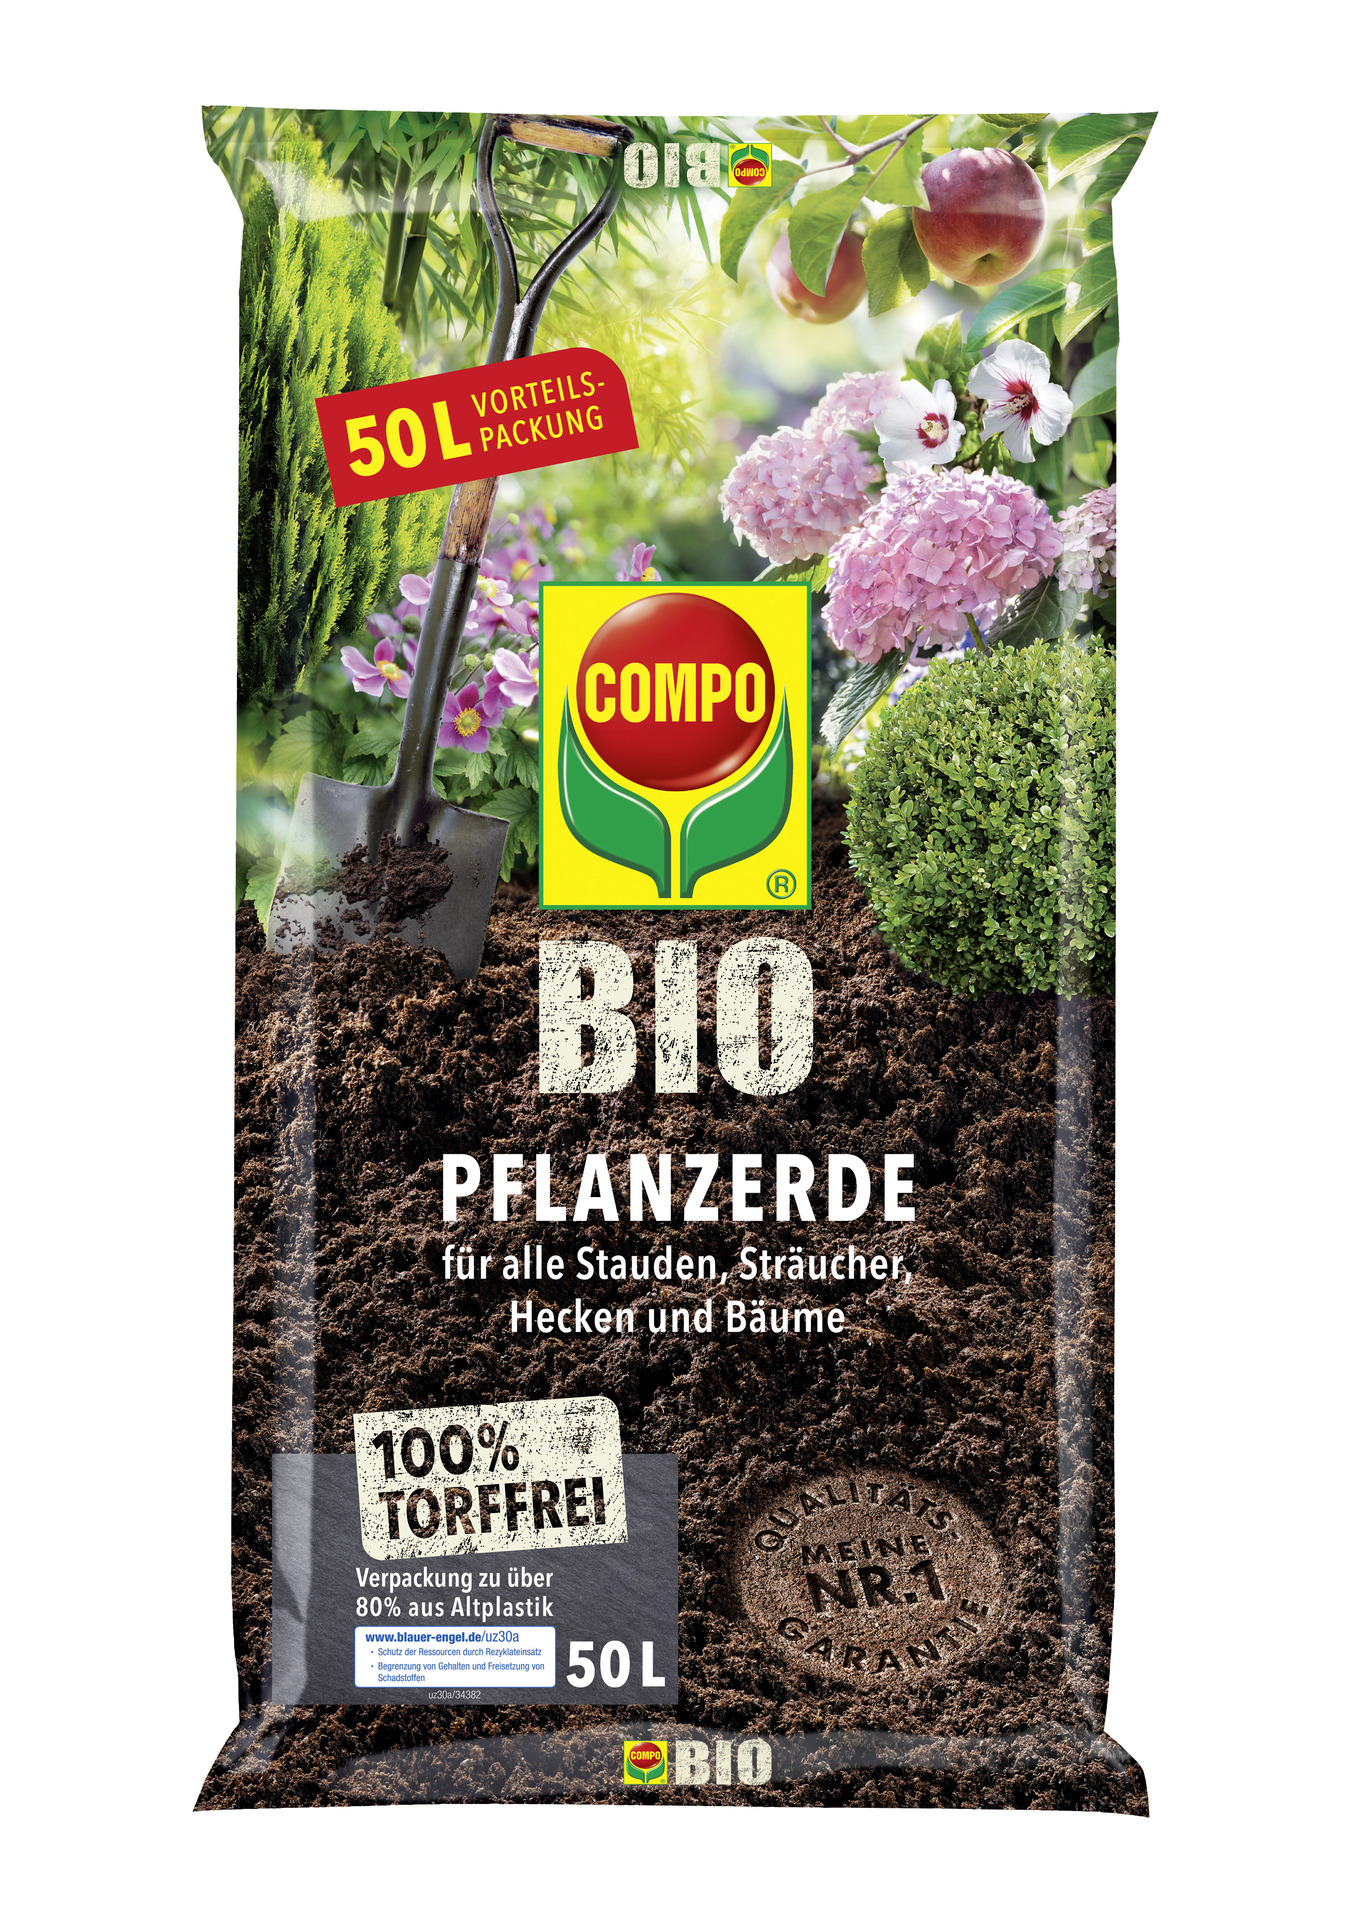 Compo GmbH BIO Pflanzerde torffrei 1 x 50 L